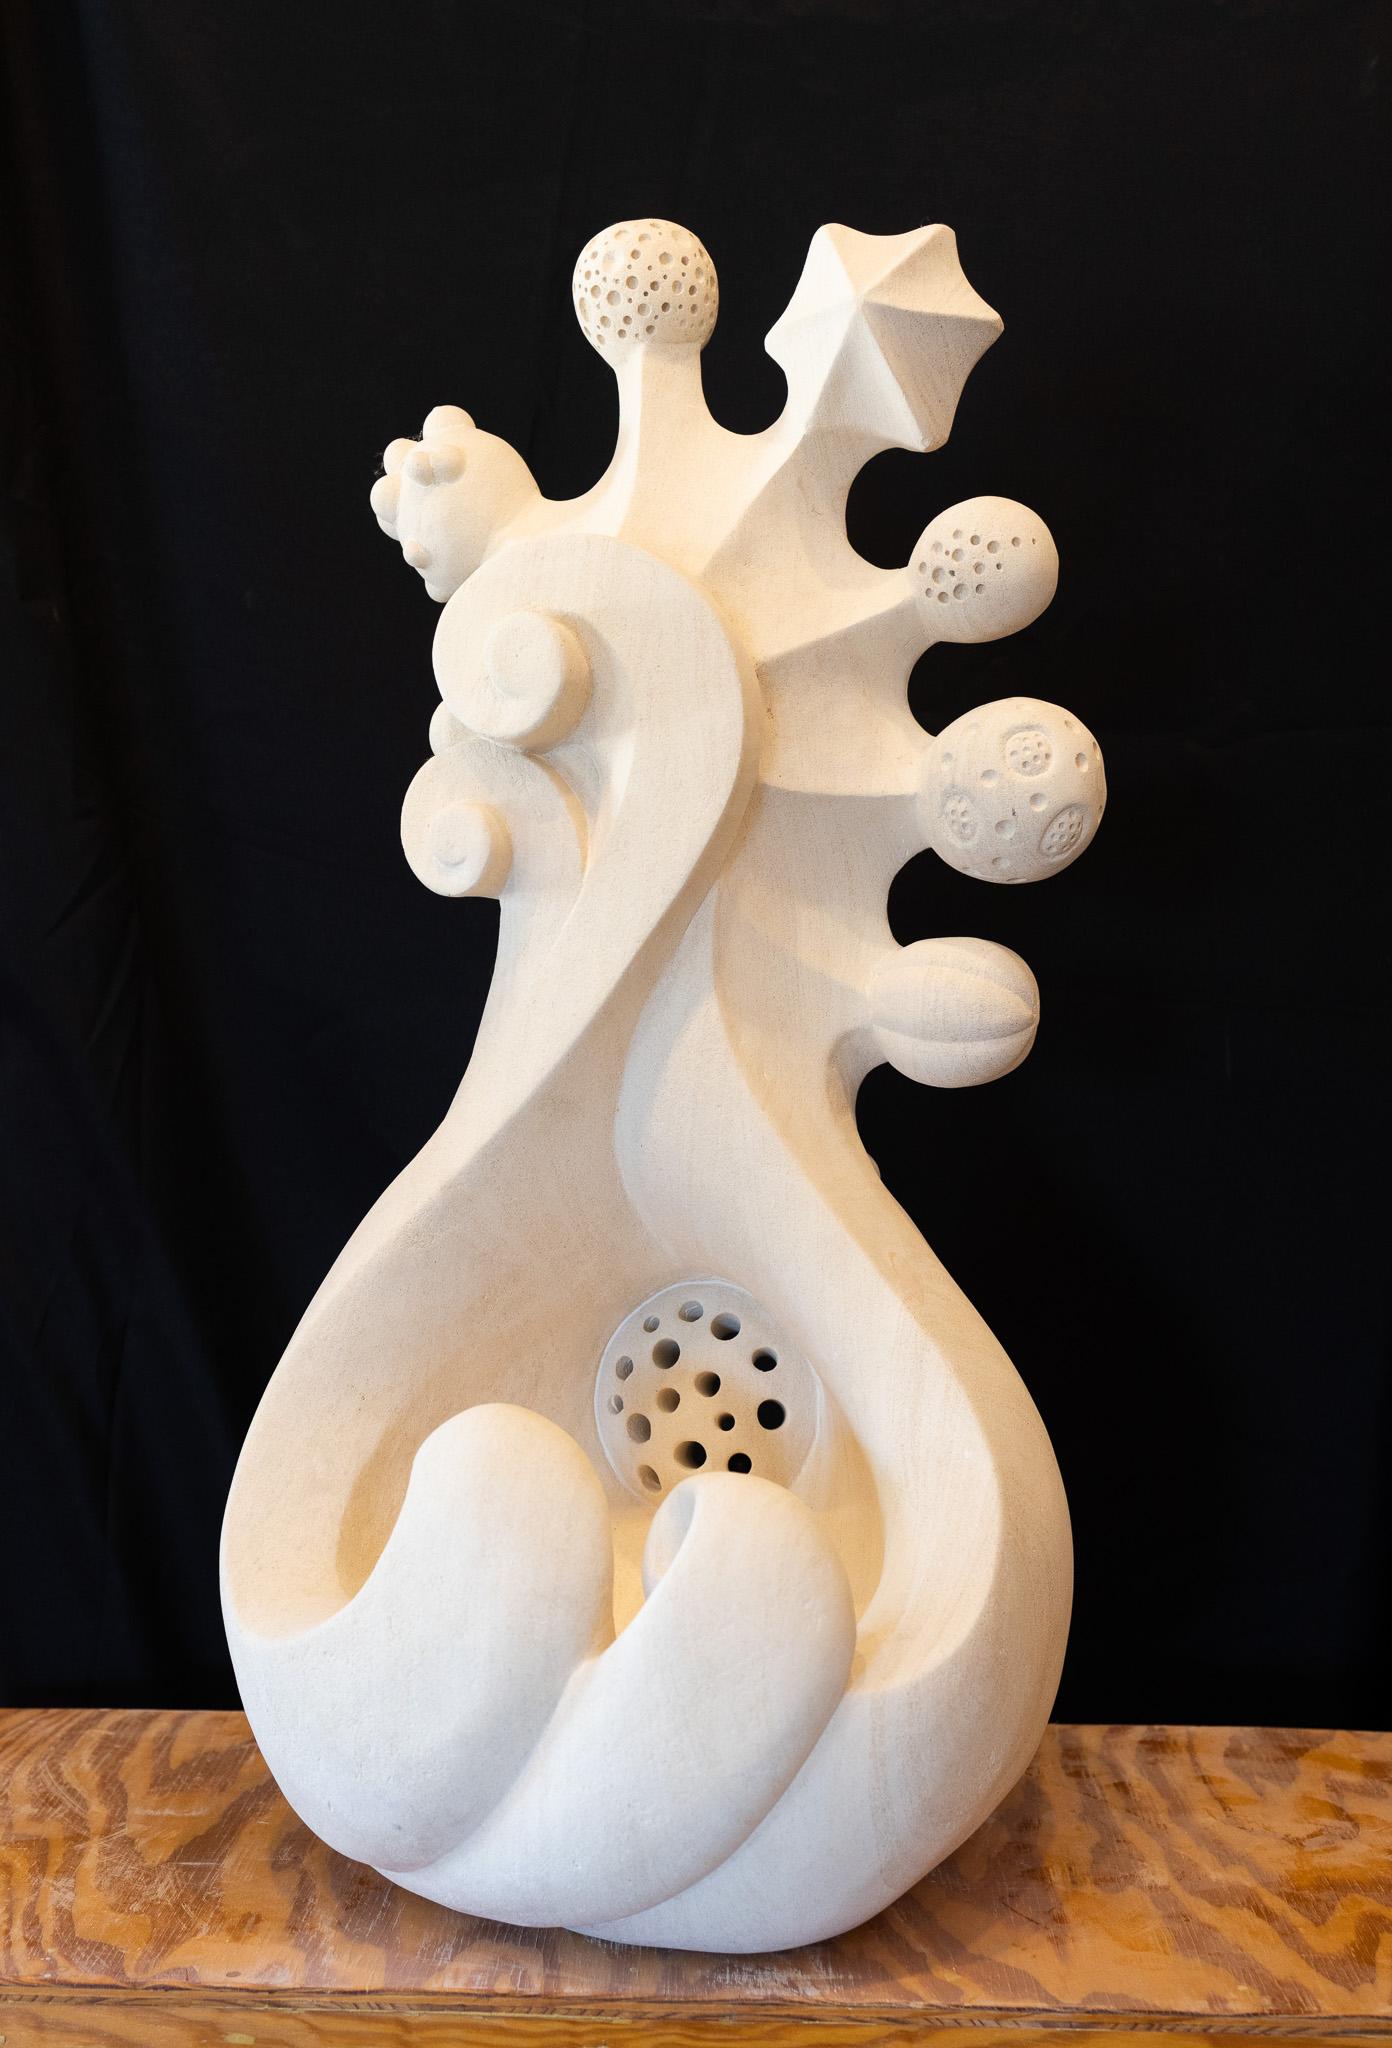 Bob Ragan Figurative Sculpture - "Water Wheel" Fantastical Psychedelic Sculpture White Limestone Stone Carving